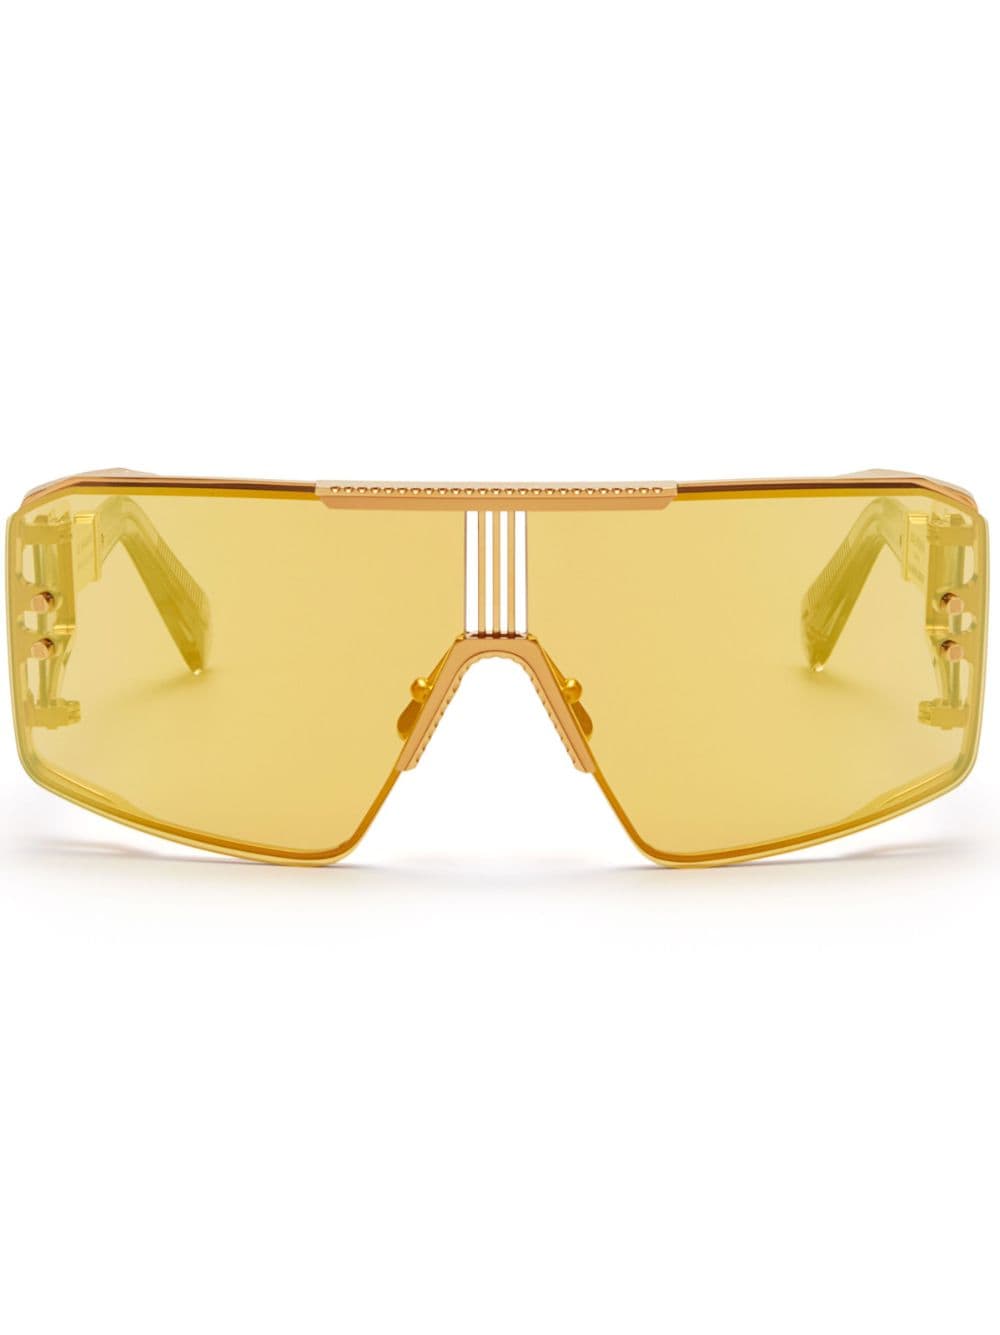 Balmain Eyewear Le Masque tinted sunglasses - Yellow von Balmain Eyewear